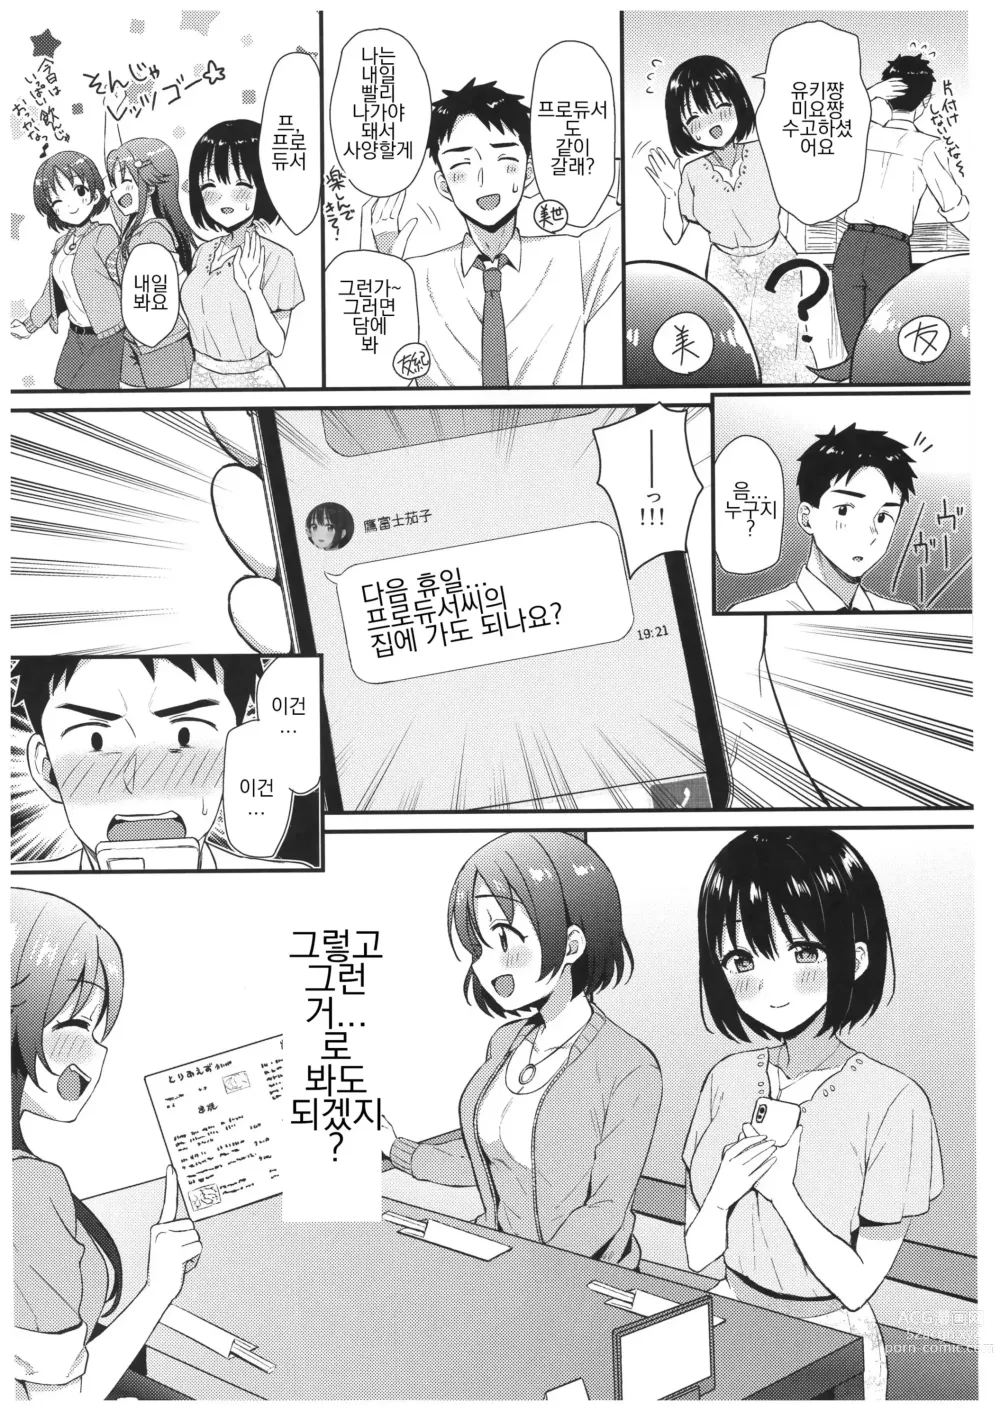 Page 3 of doujinshi 카코 씨와 첫 경험.